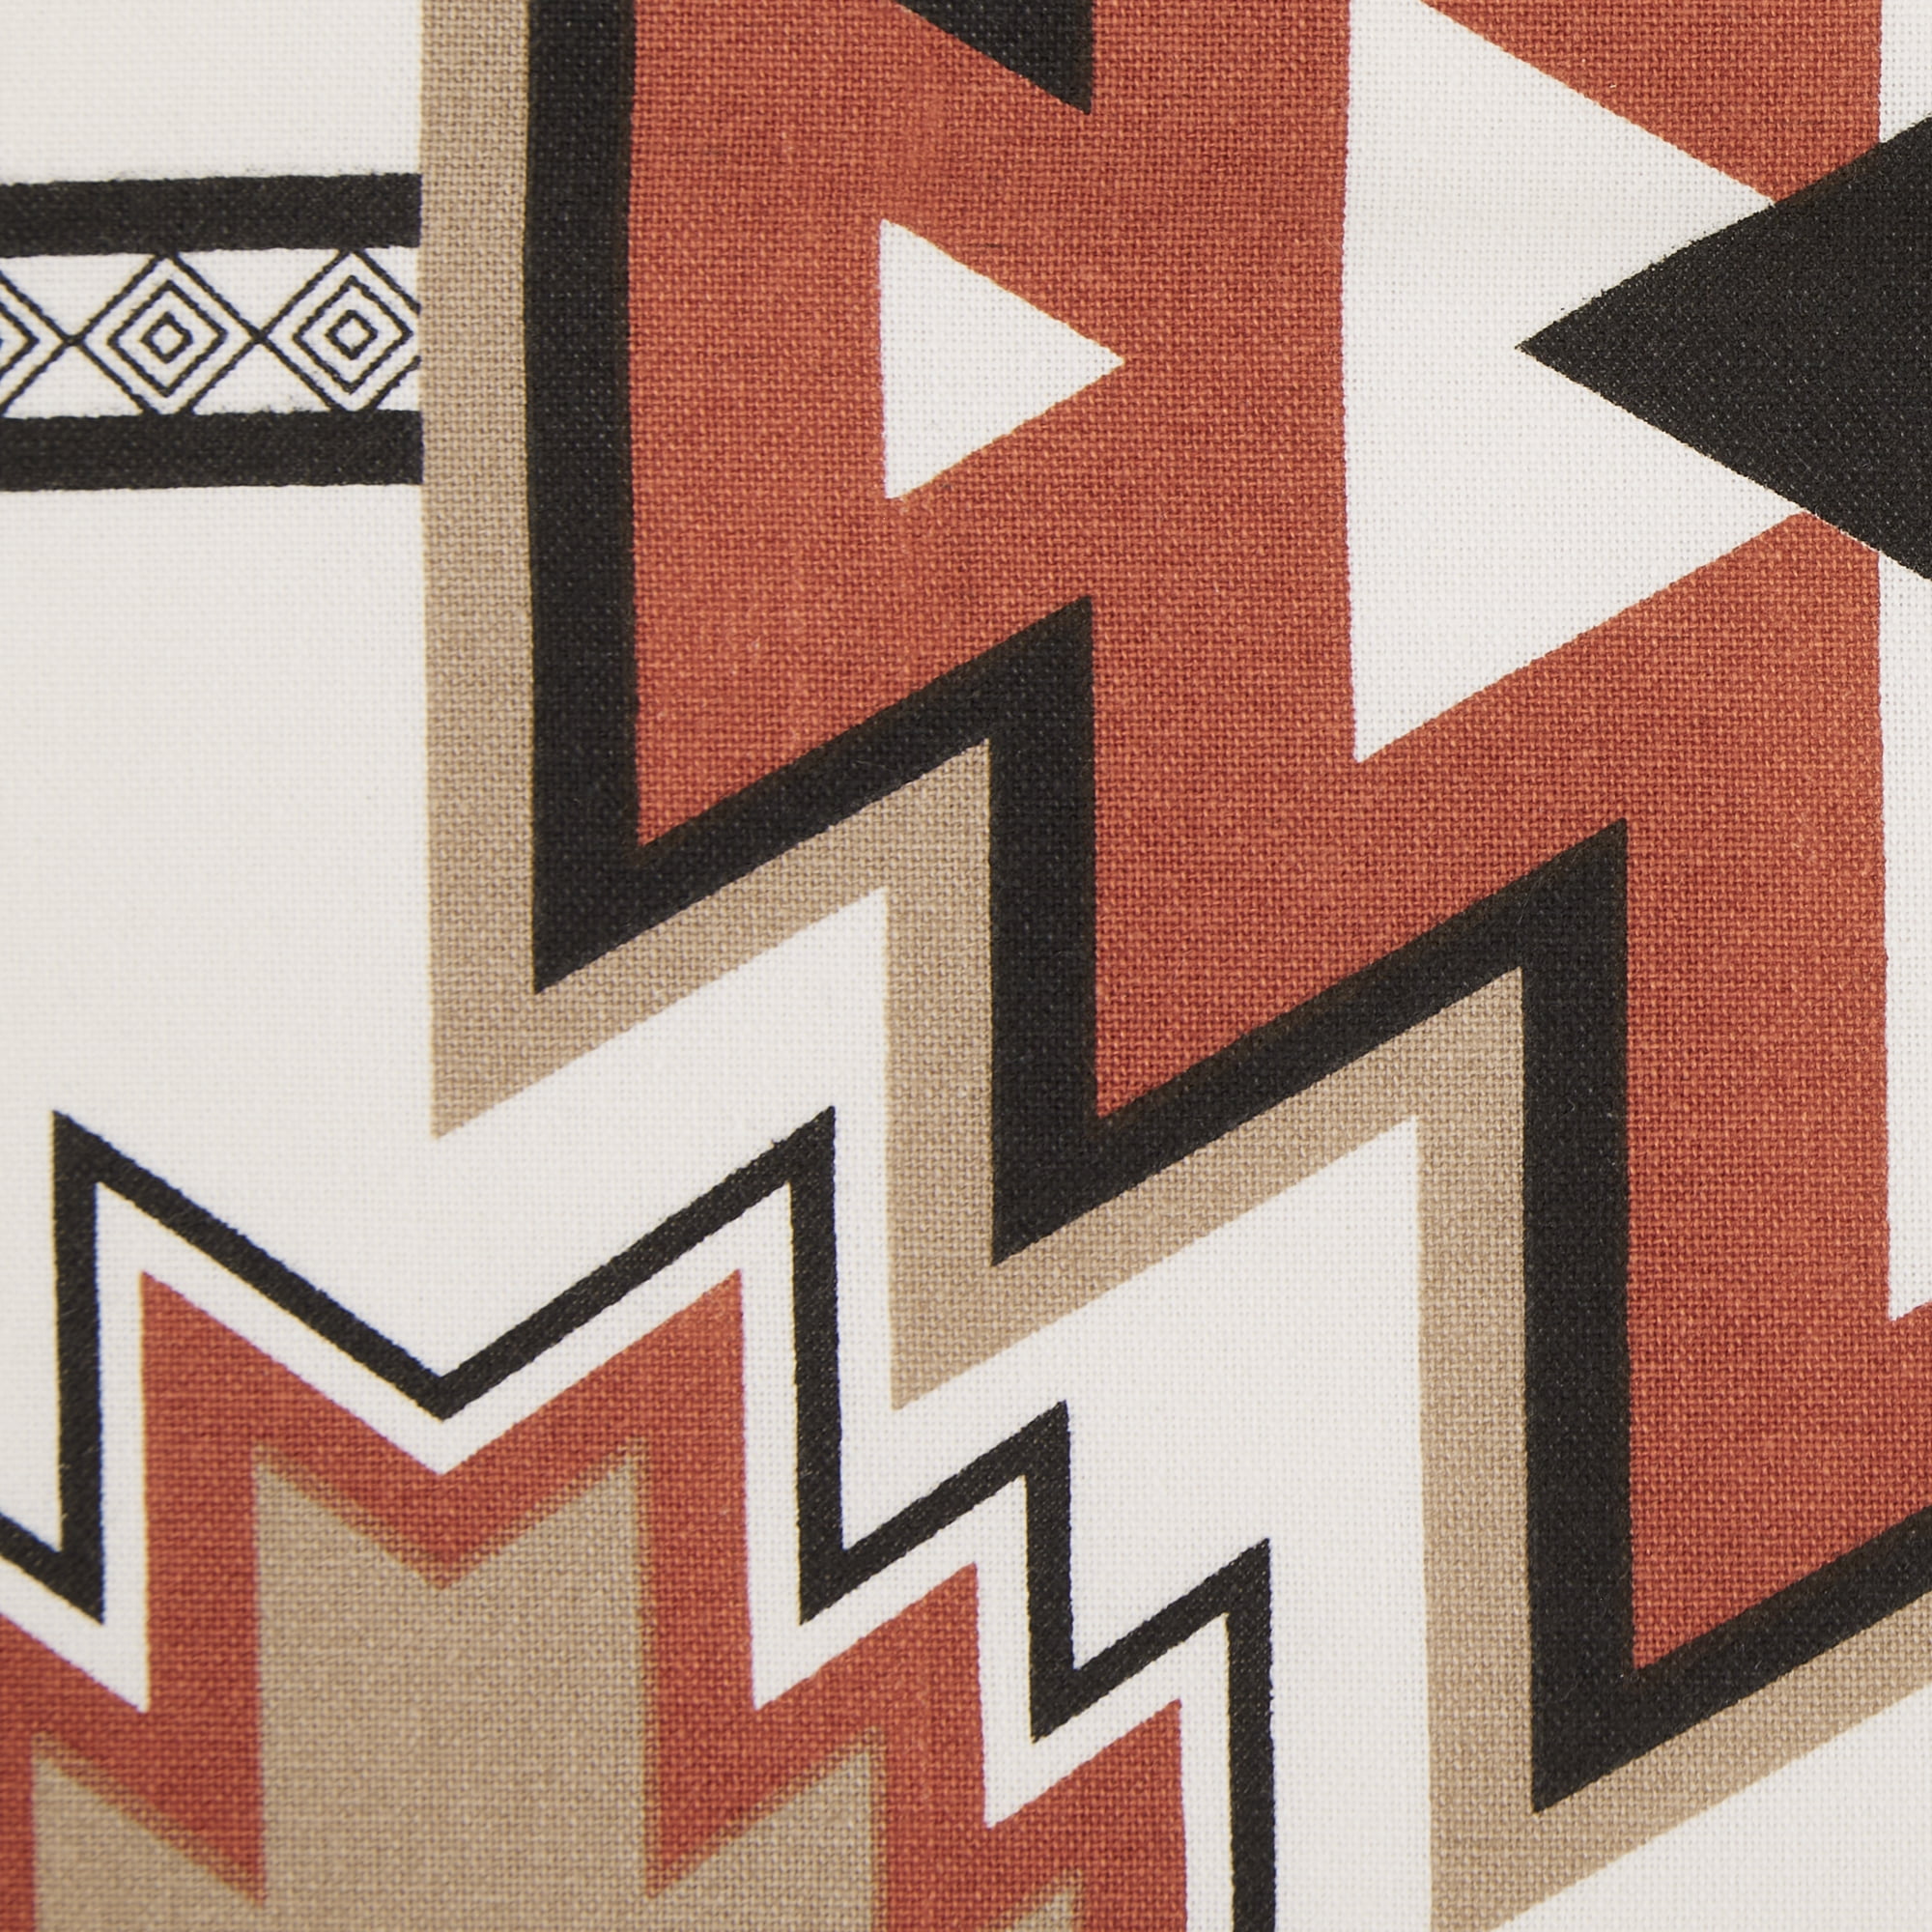 Design Imports Set of 4 Aztec Print Pillow Covers 18x18 - 20155315